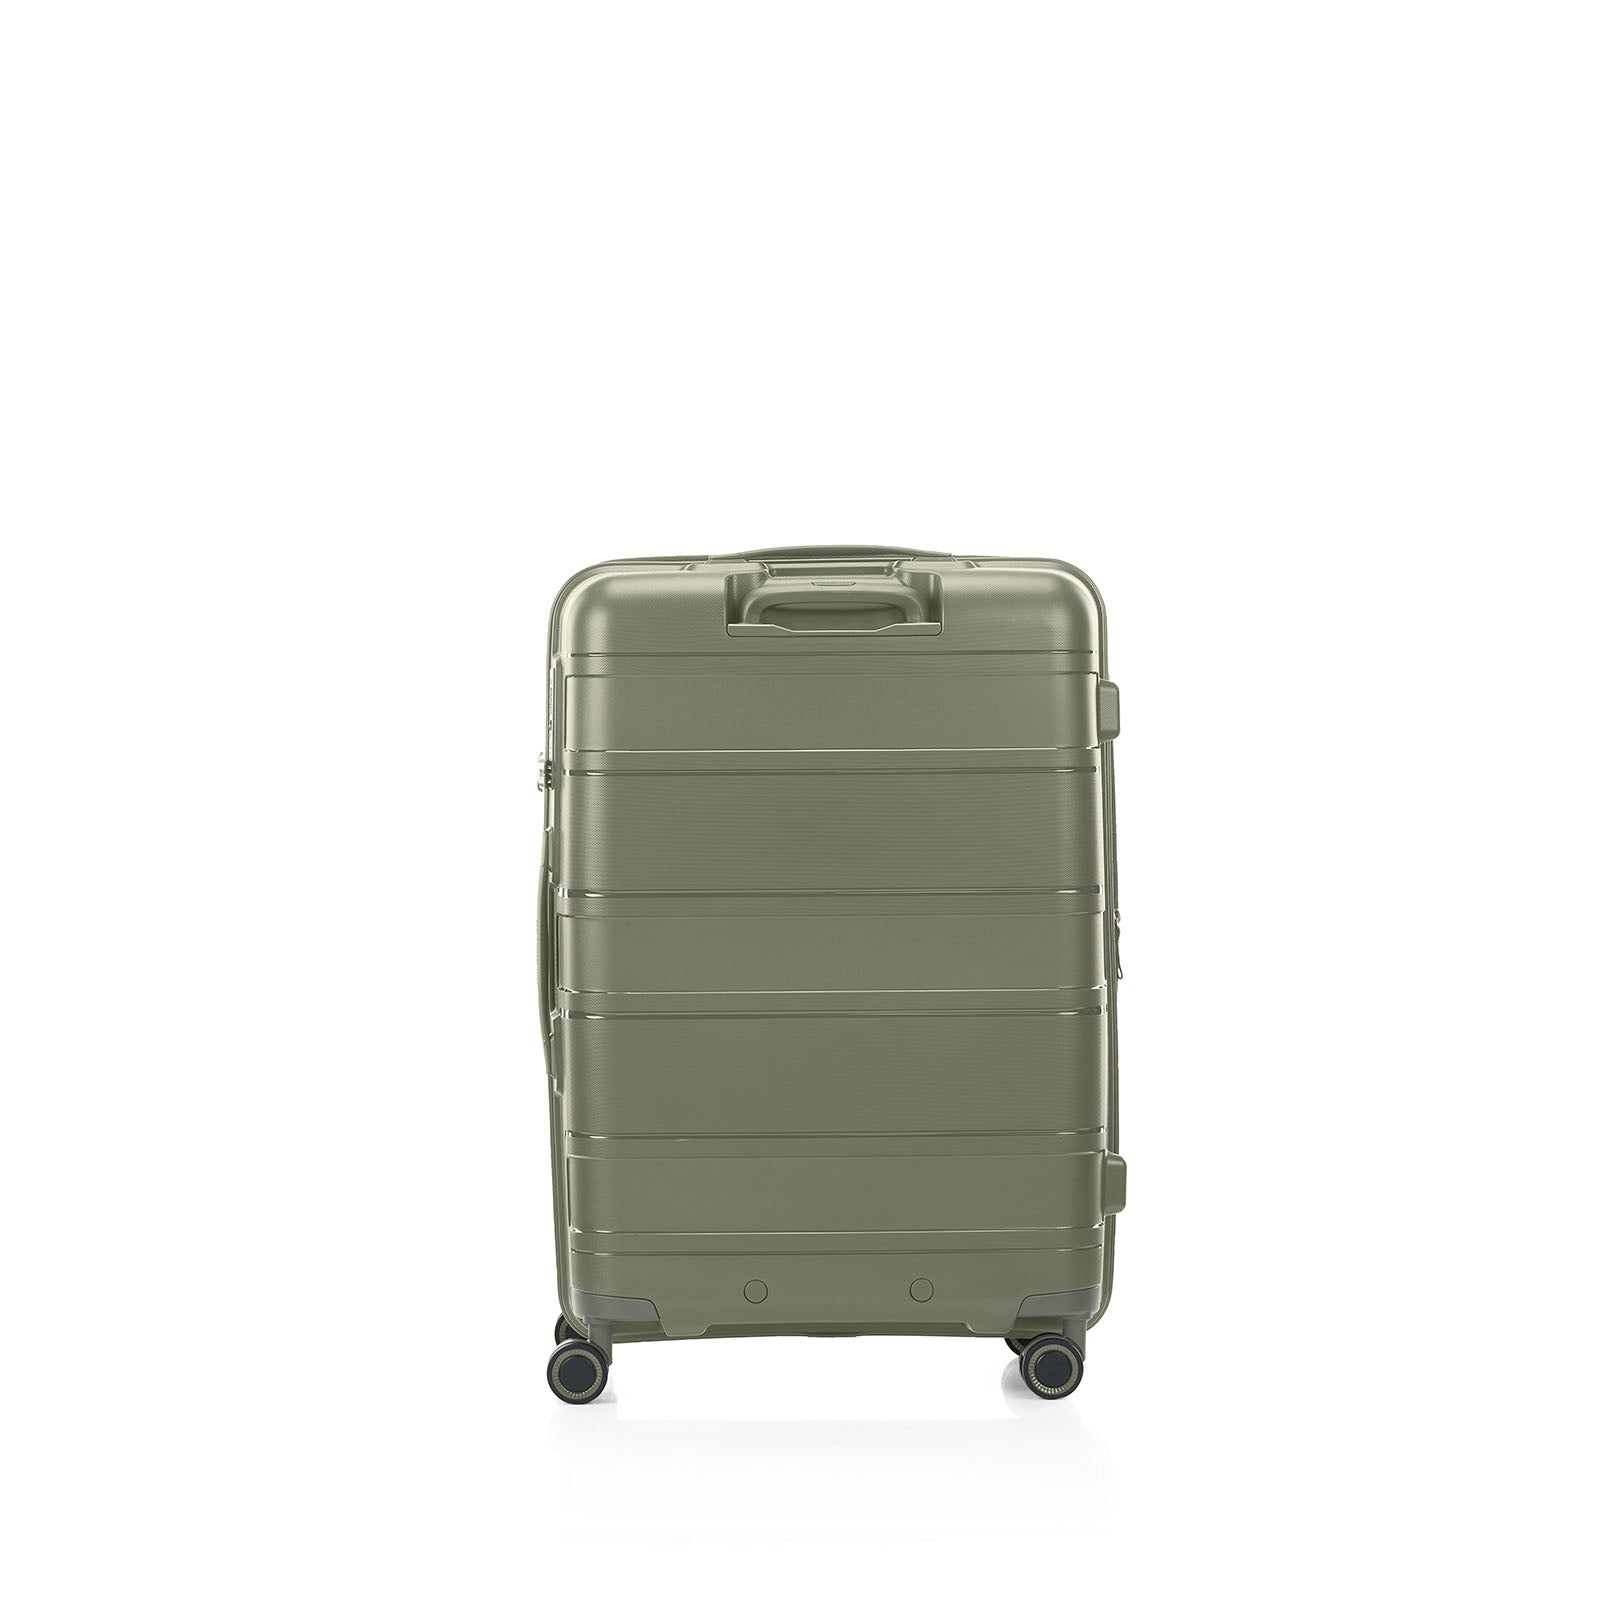 American-Tourister-Light-Max-69cm-Suitcase-Khaki-Back